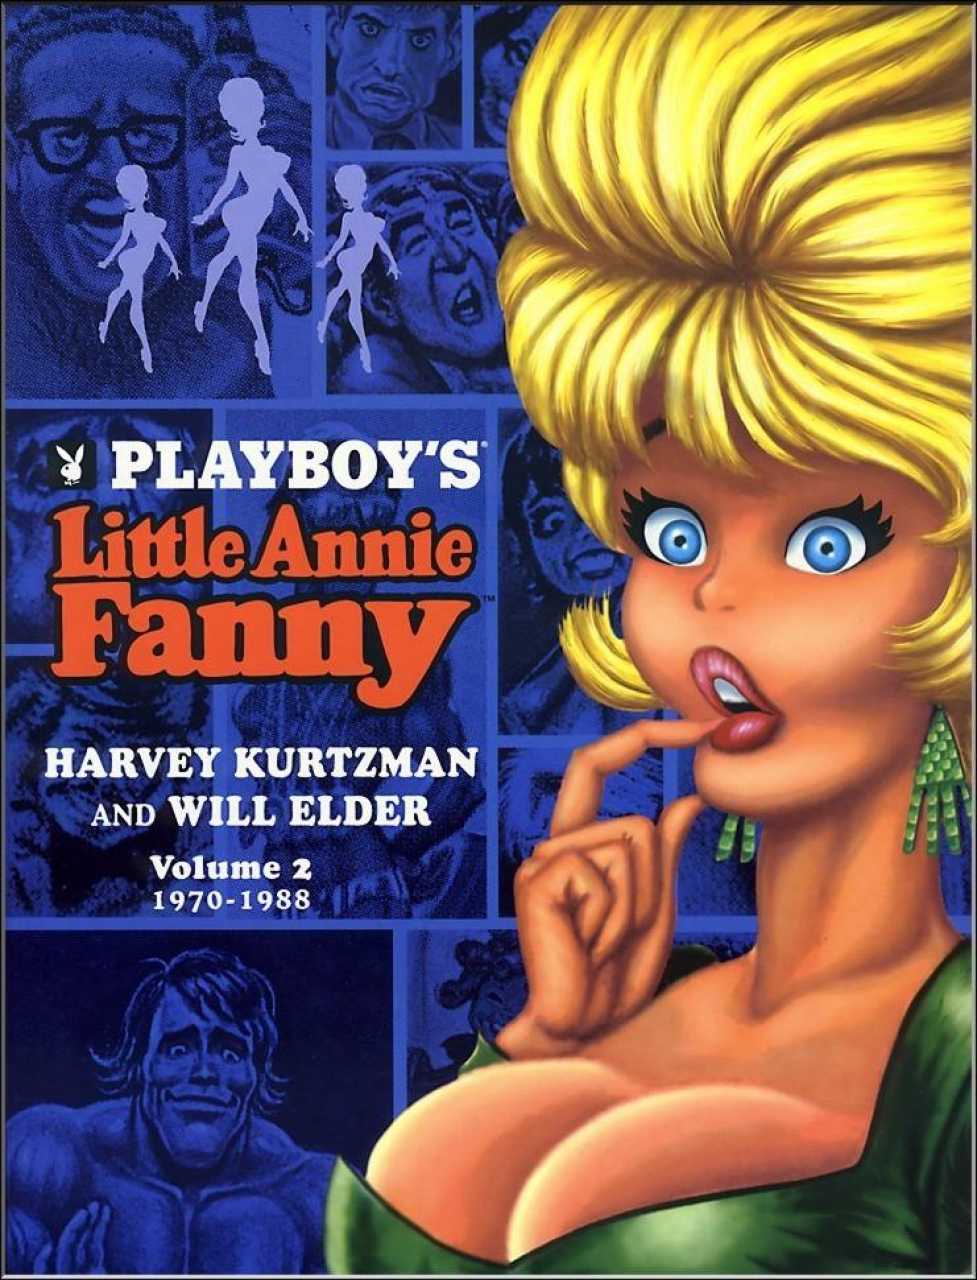 Playboy Special, Little Annie Fanny Volume 2